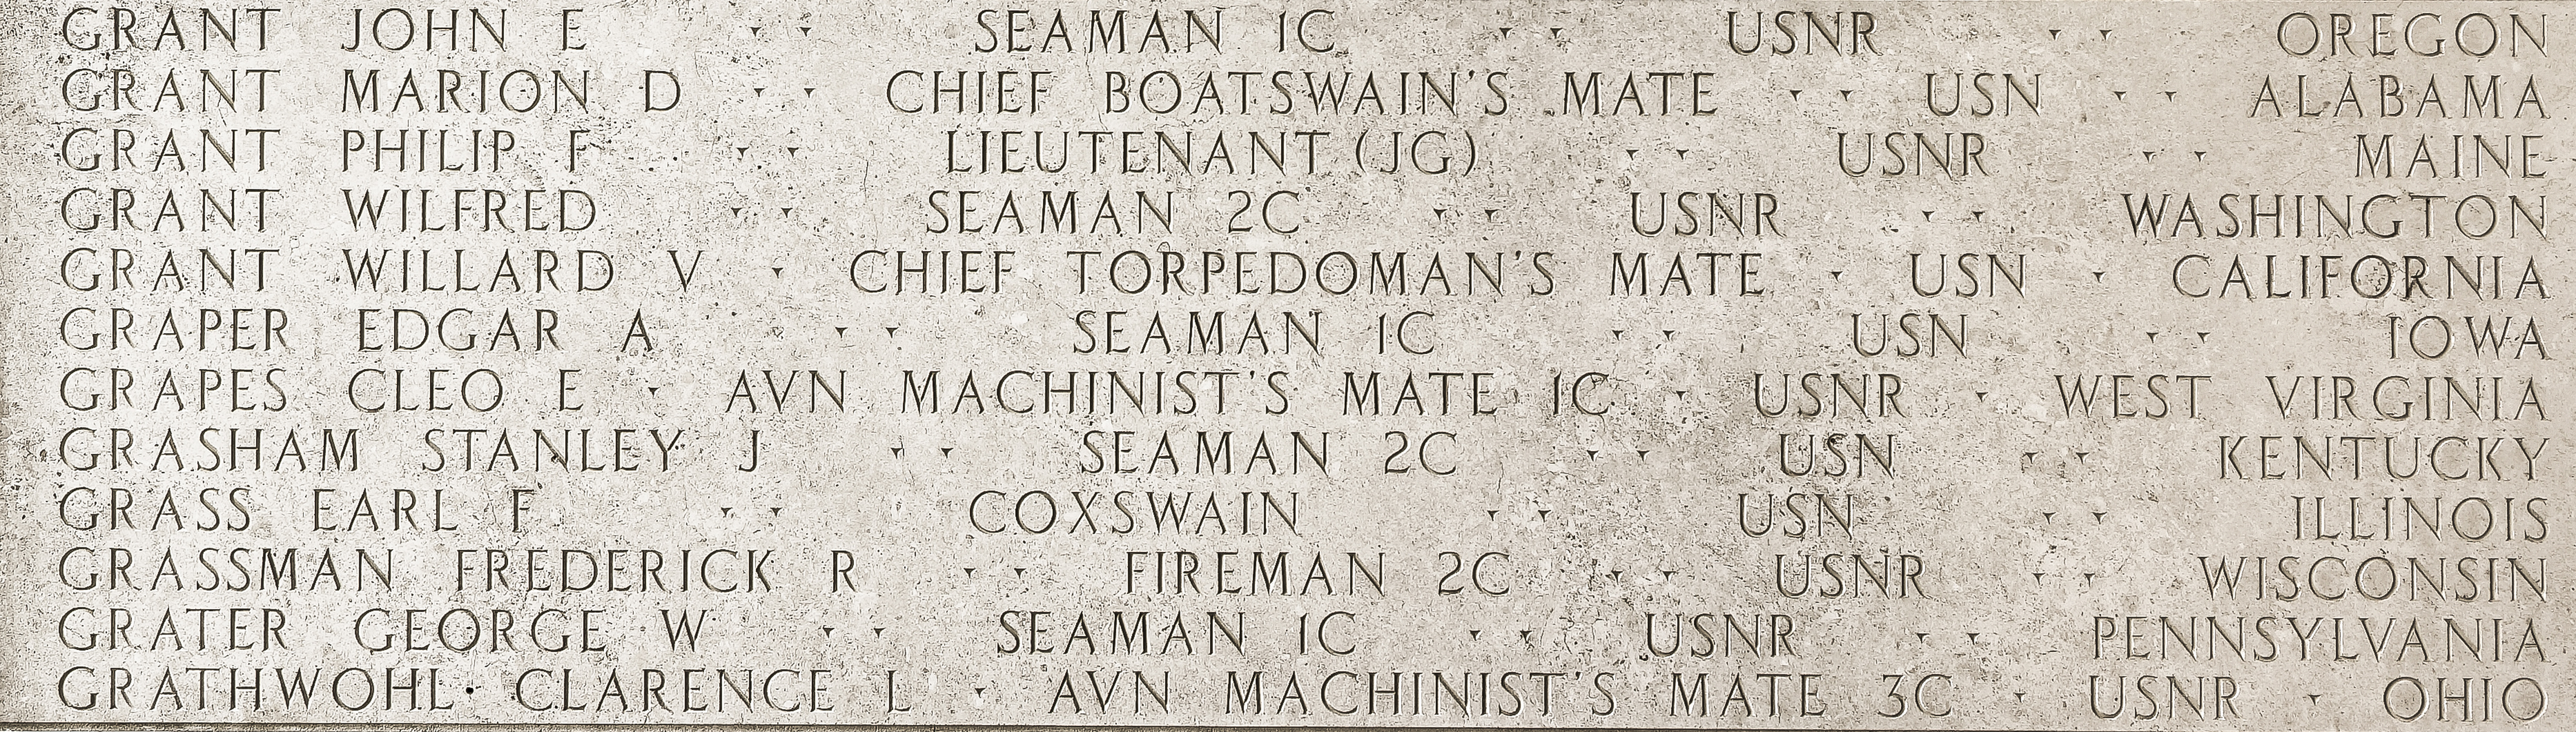 John E. Grant, Seaman First Class